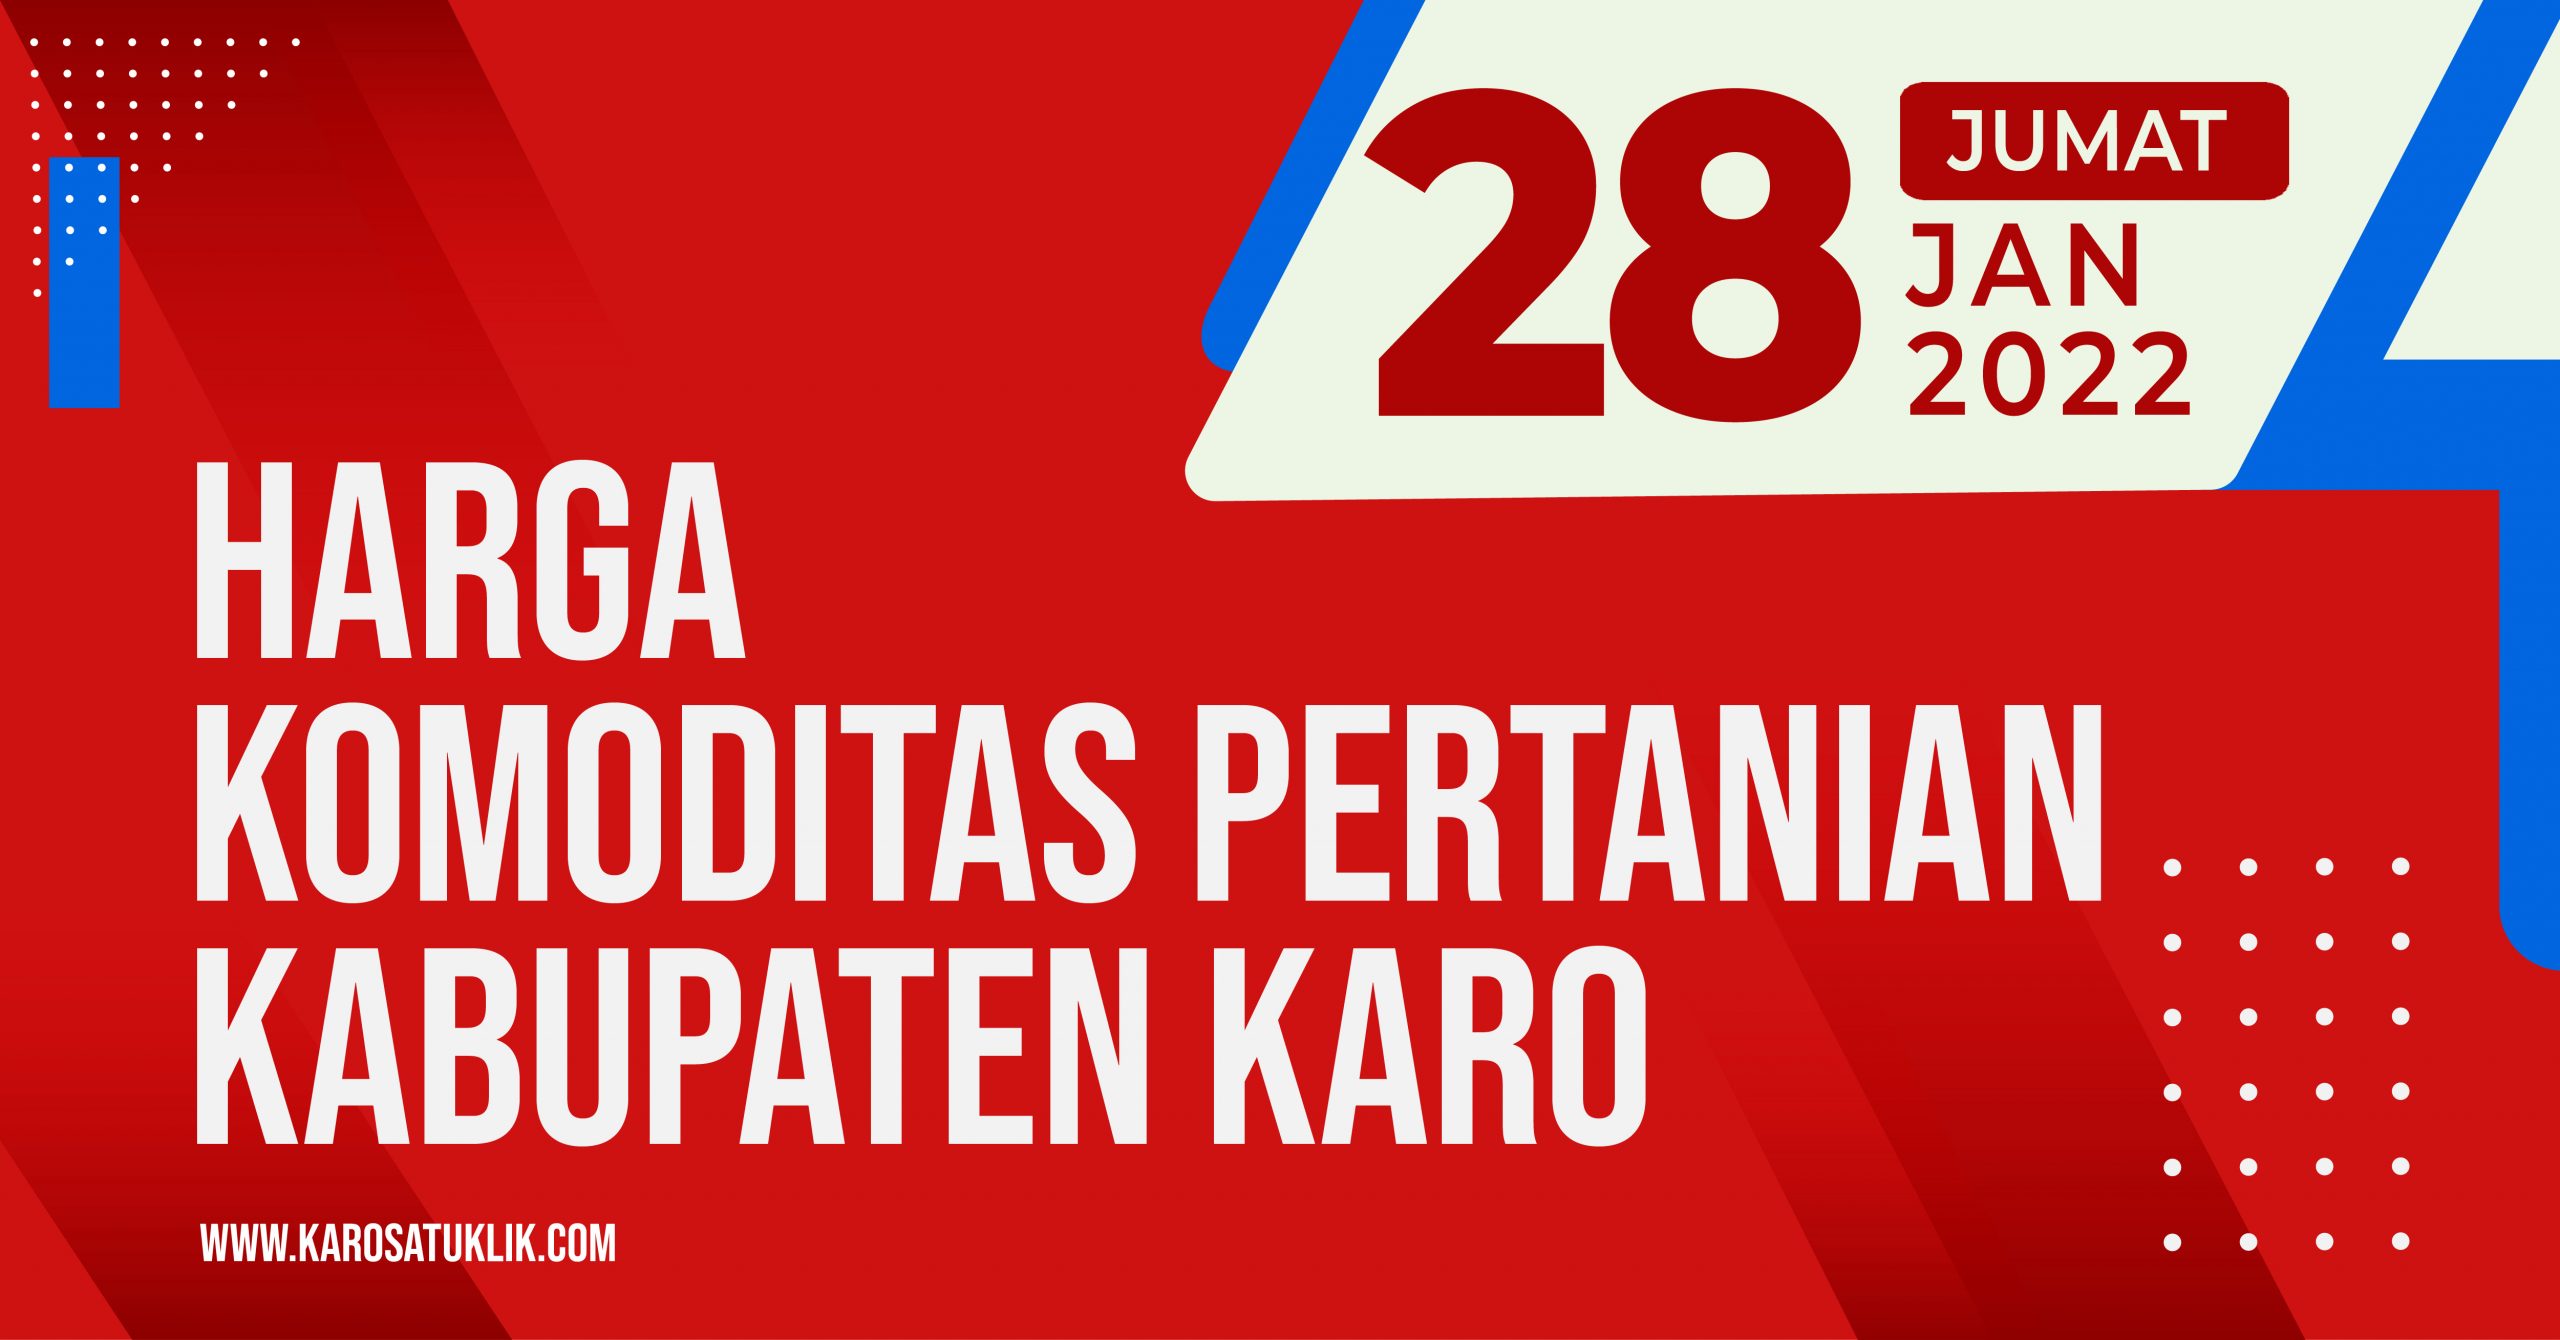 Daftar Harga Komoditas Pertanian Kabupaten Karo, 28 Januari 2022